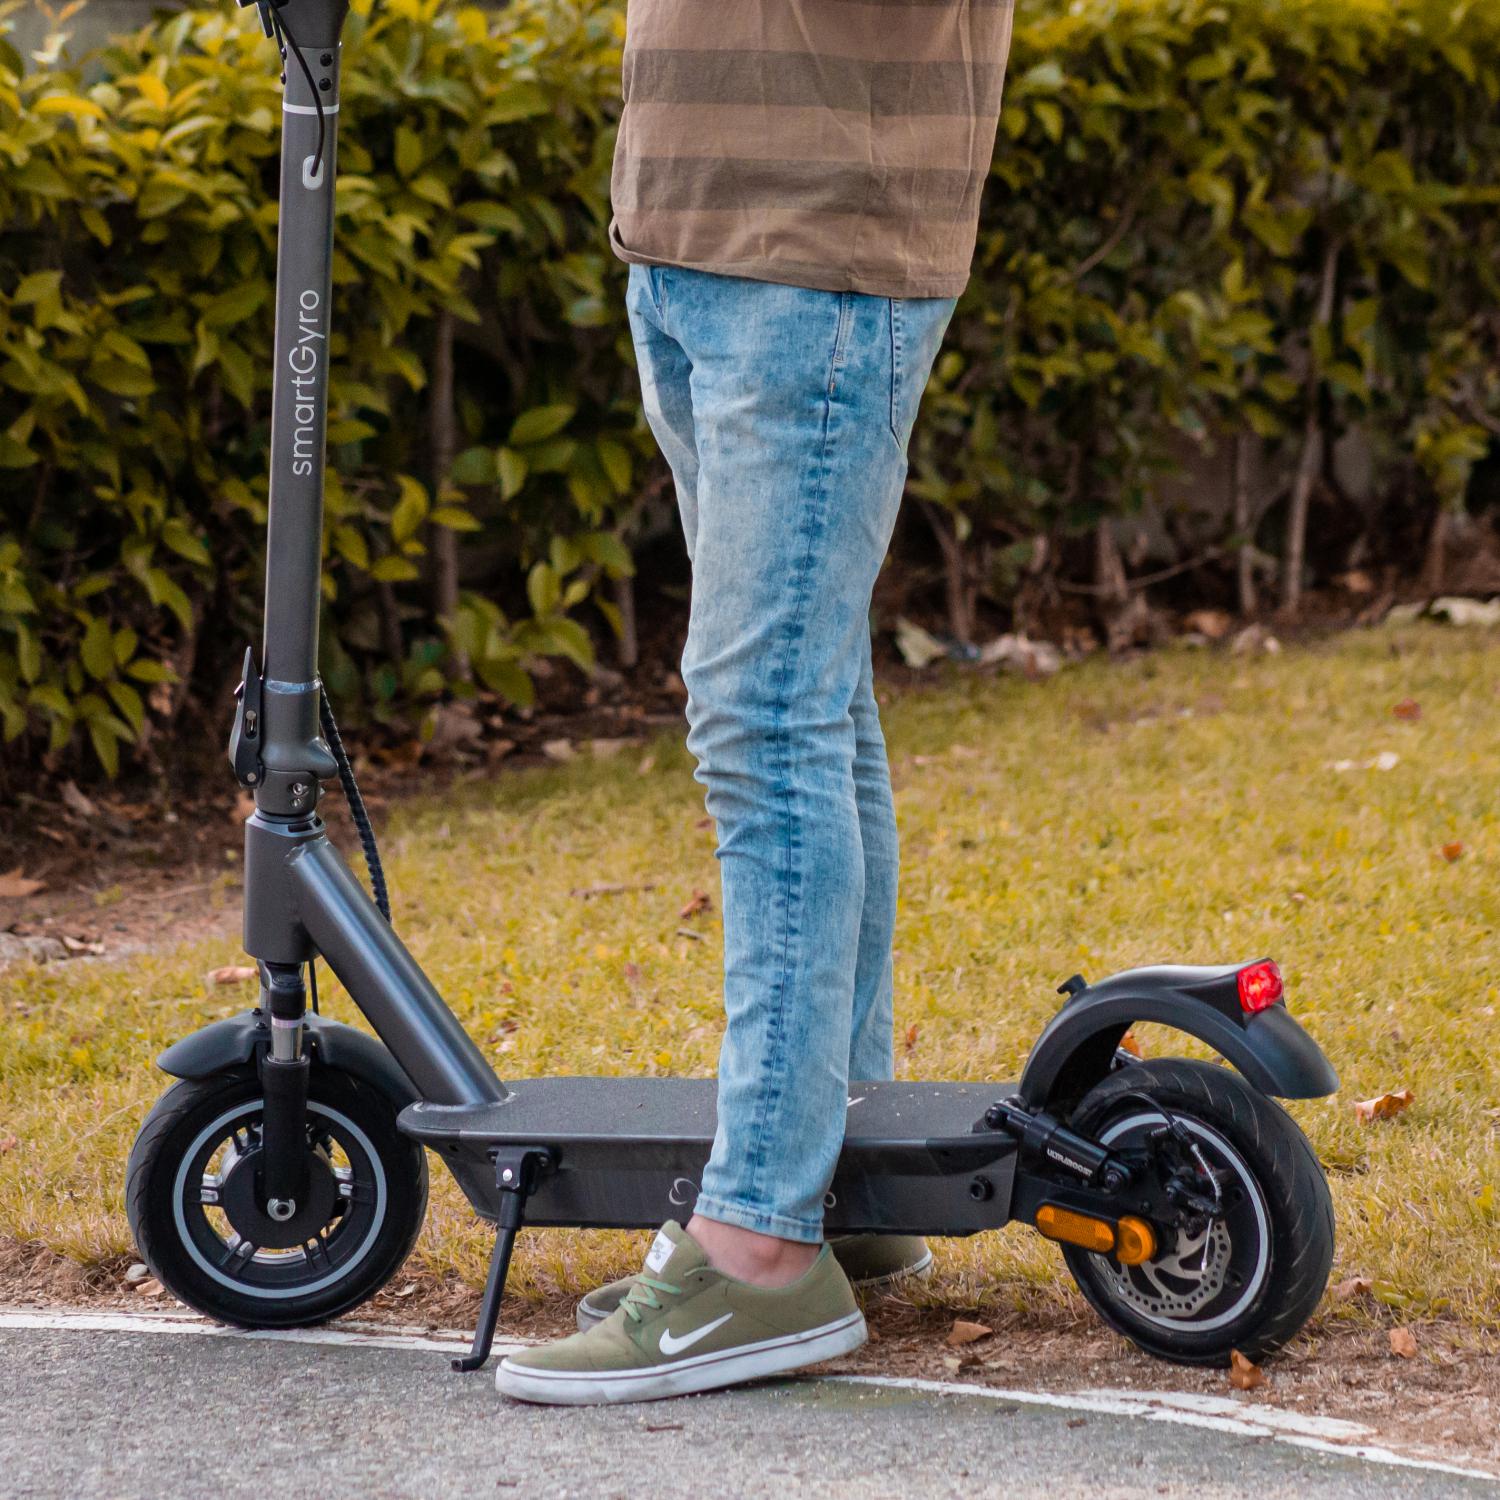 Patinete eléctrico smartGyro CROSSOVER DUAL MAX Certificado - 360Scooters